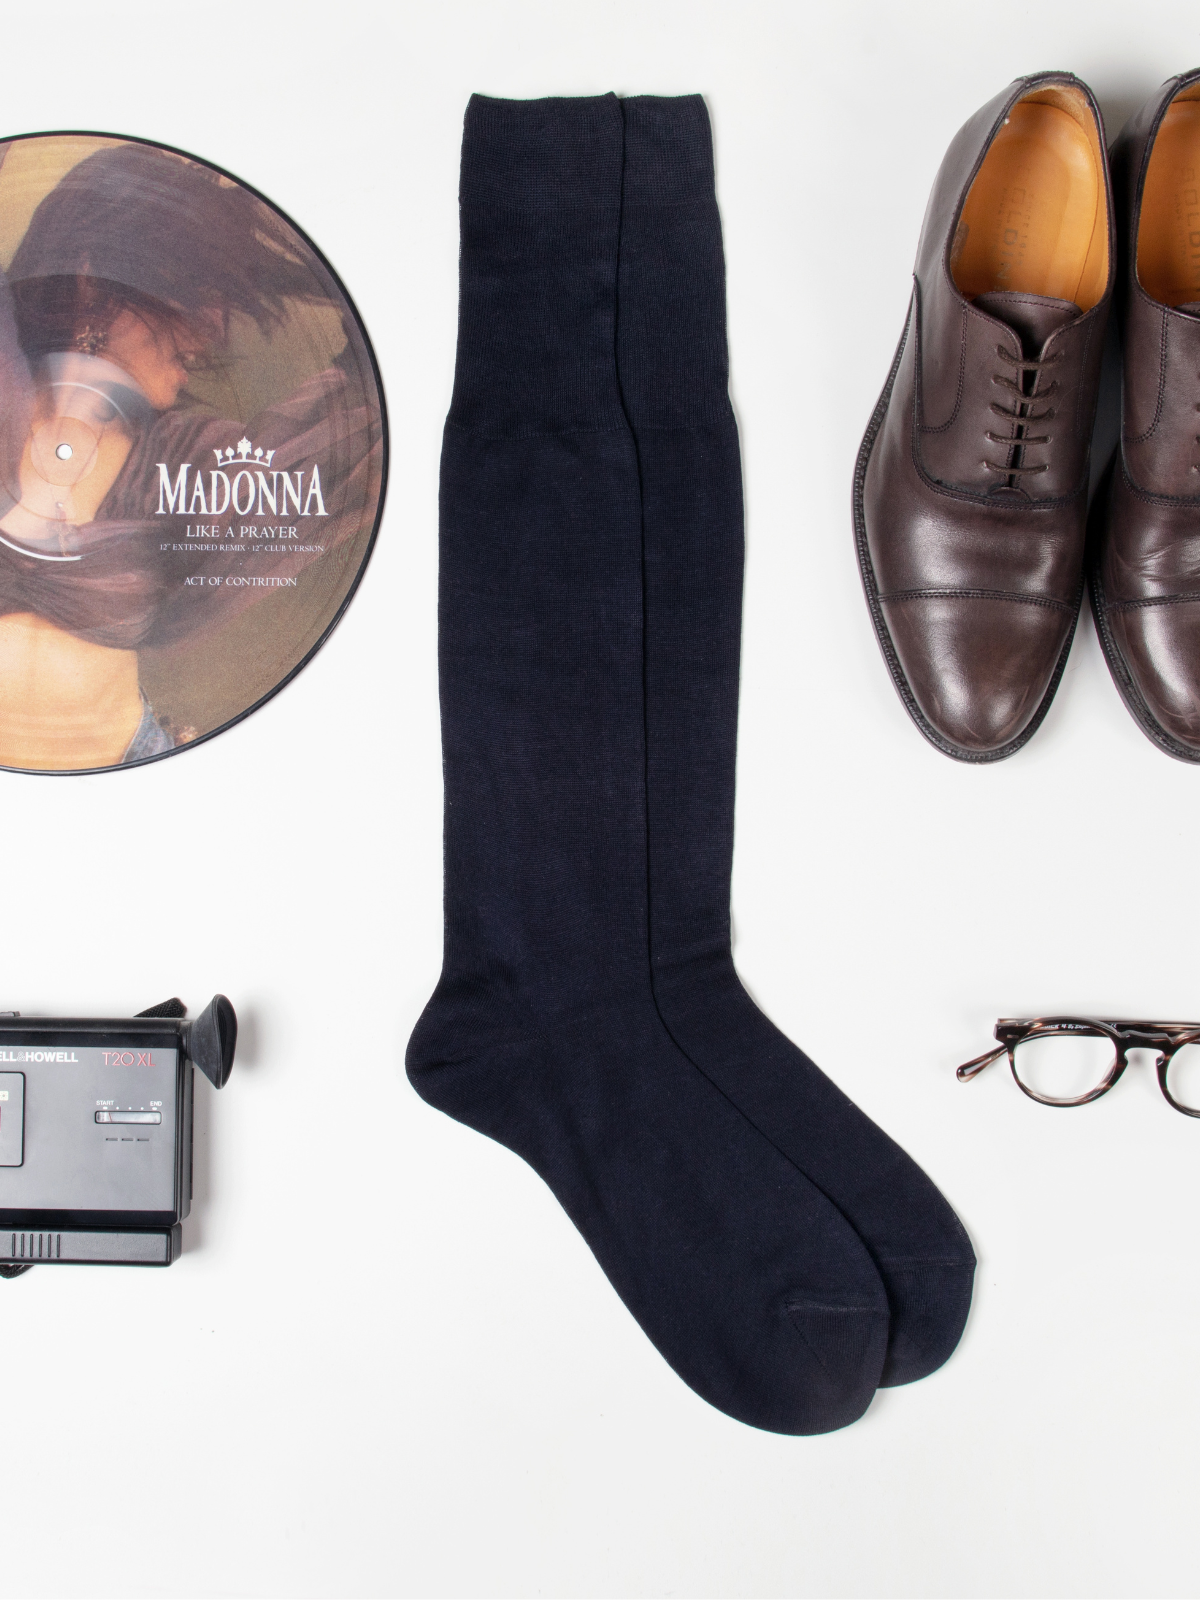 Long Wool Socks for Men | Plain Color | Pack of 3 Pairs | Cool Wool UL